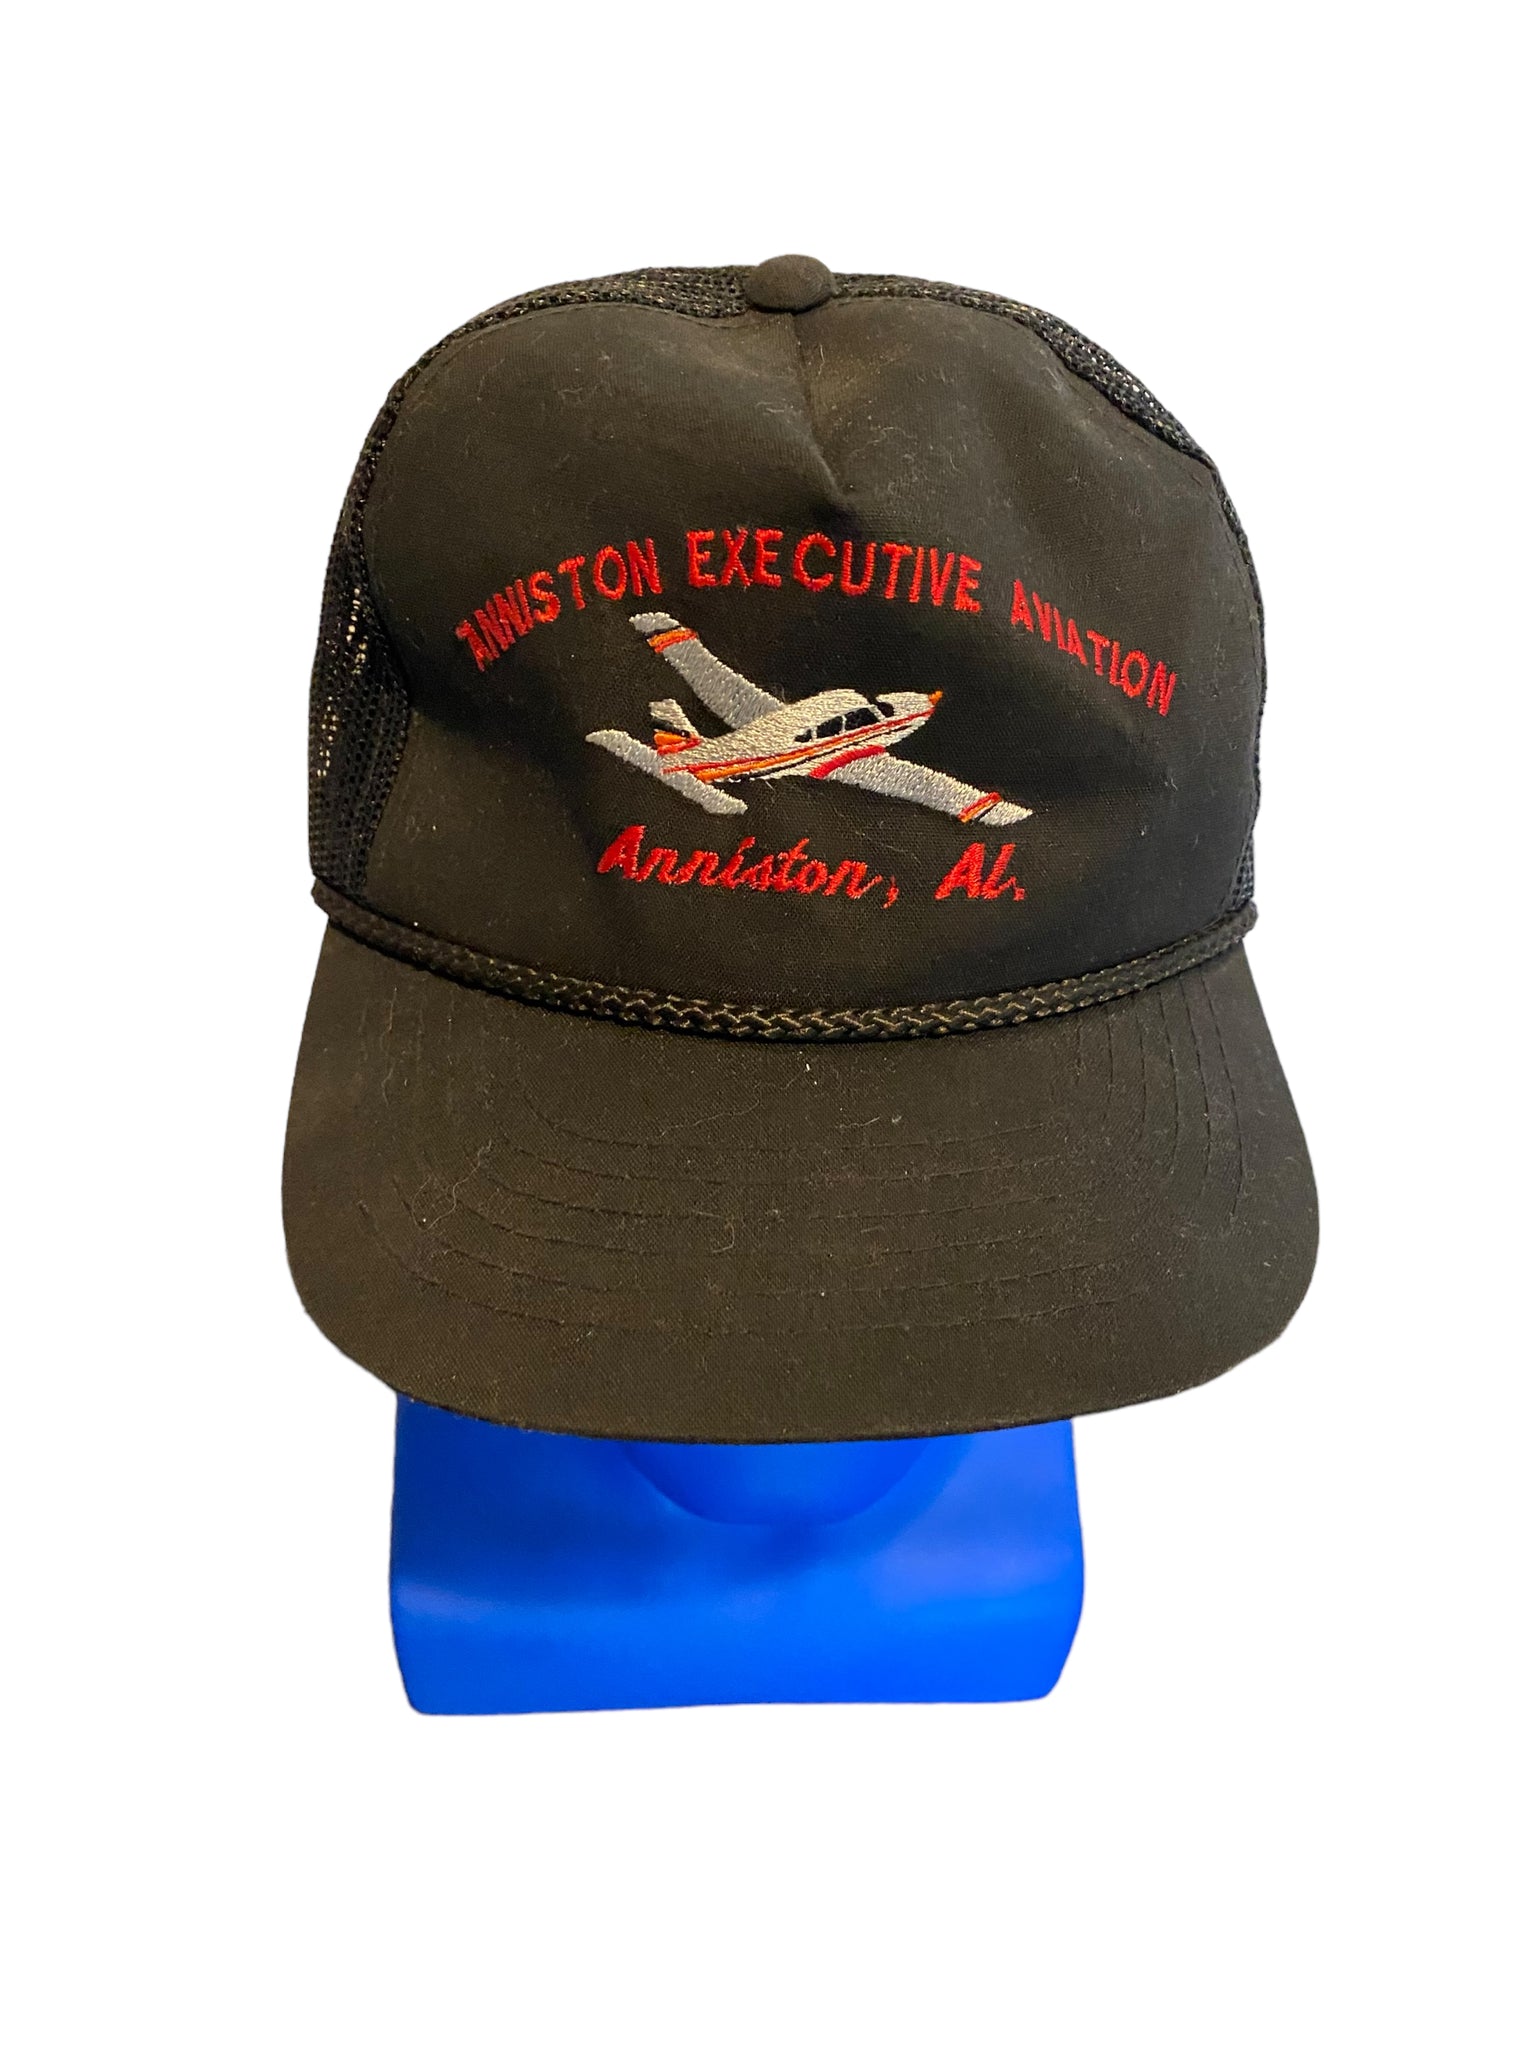 Vintage Anniston executive aviation anniston, AL embroidered snapback hat